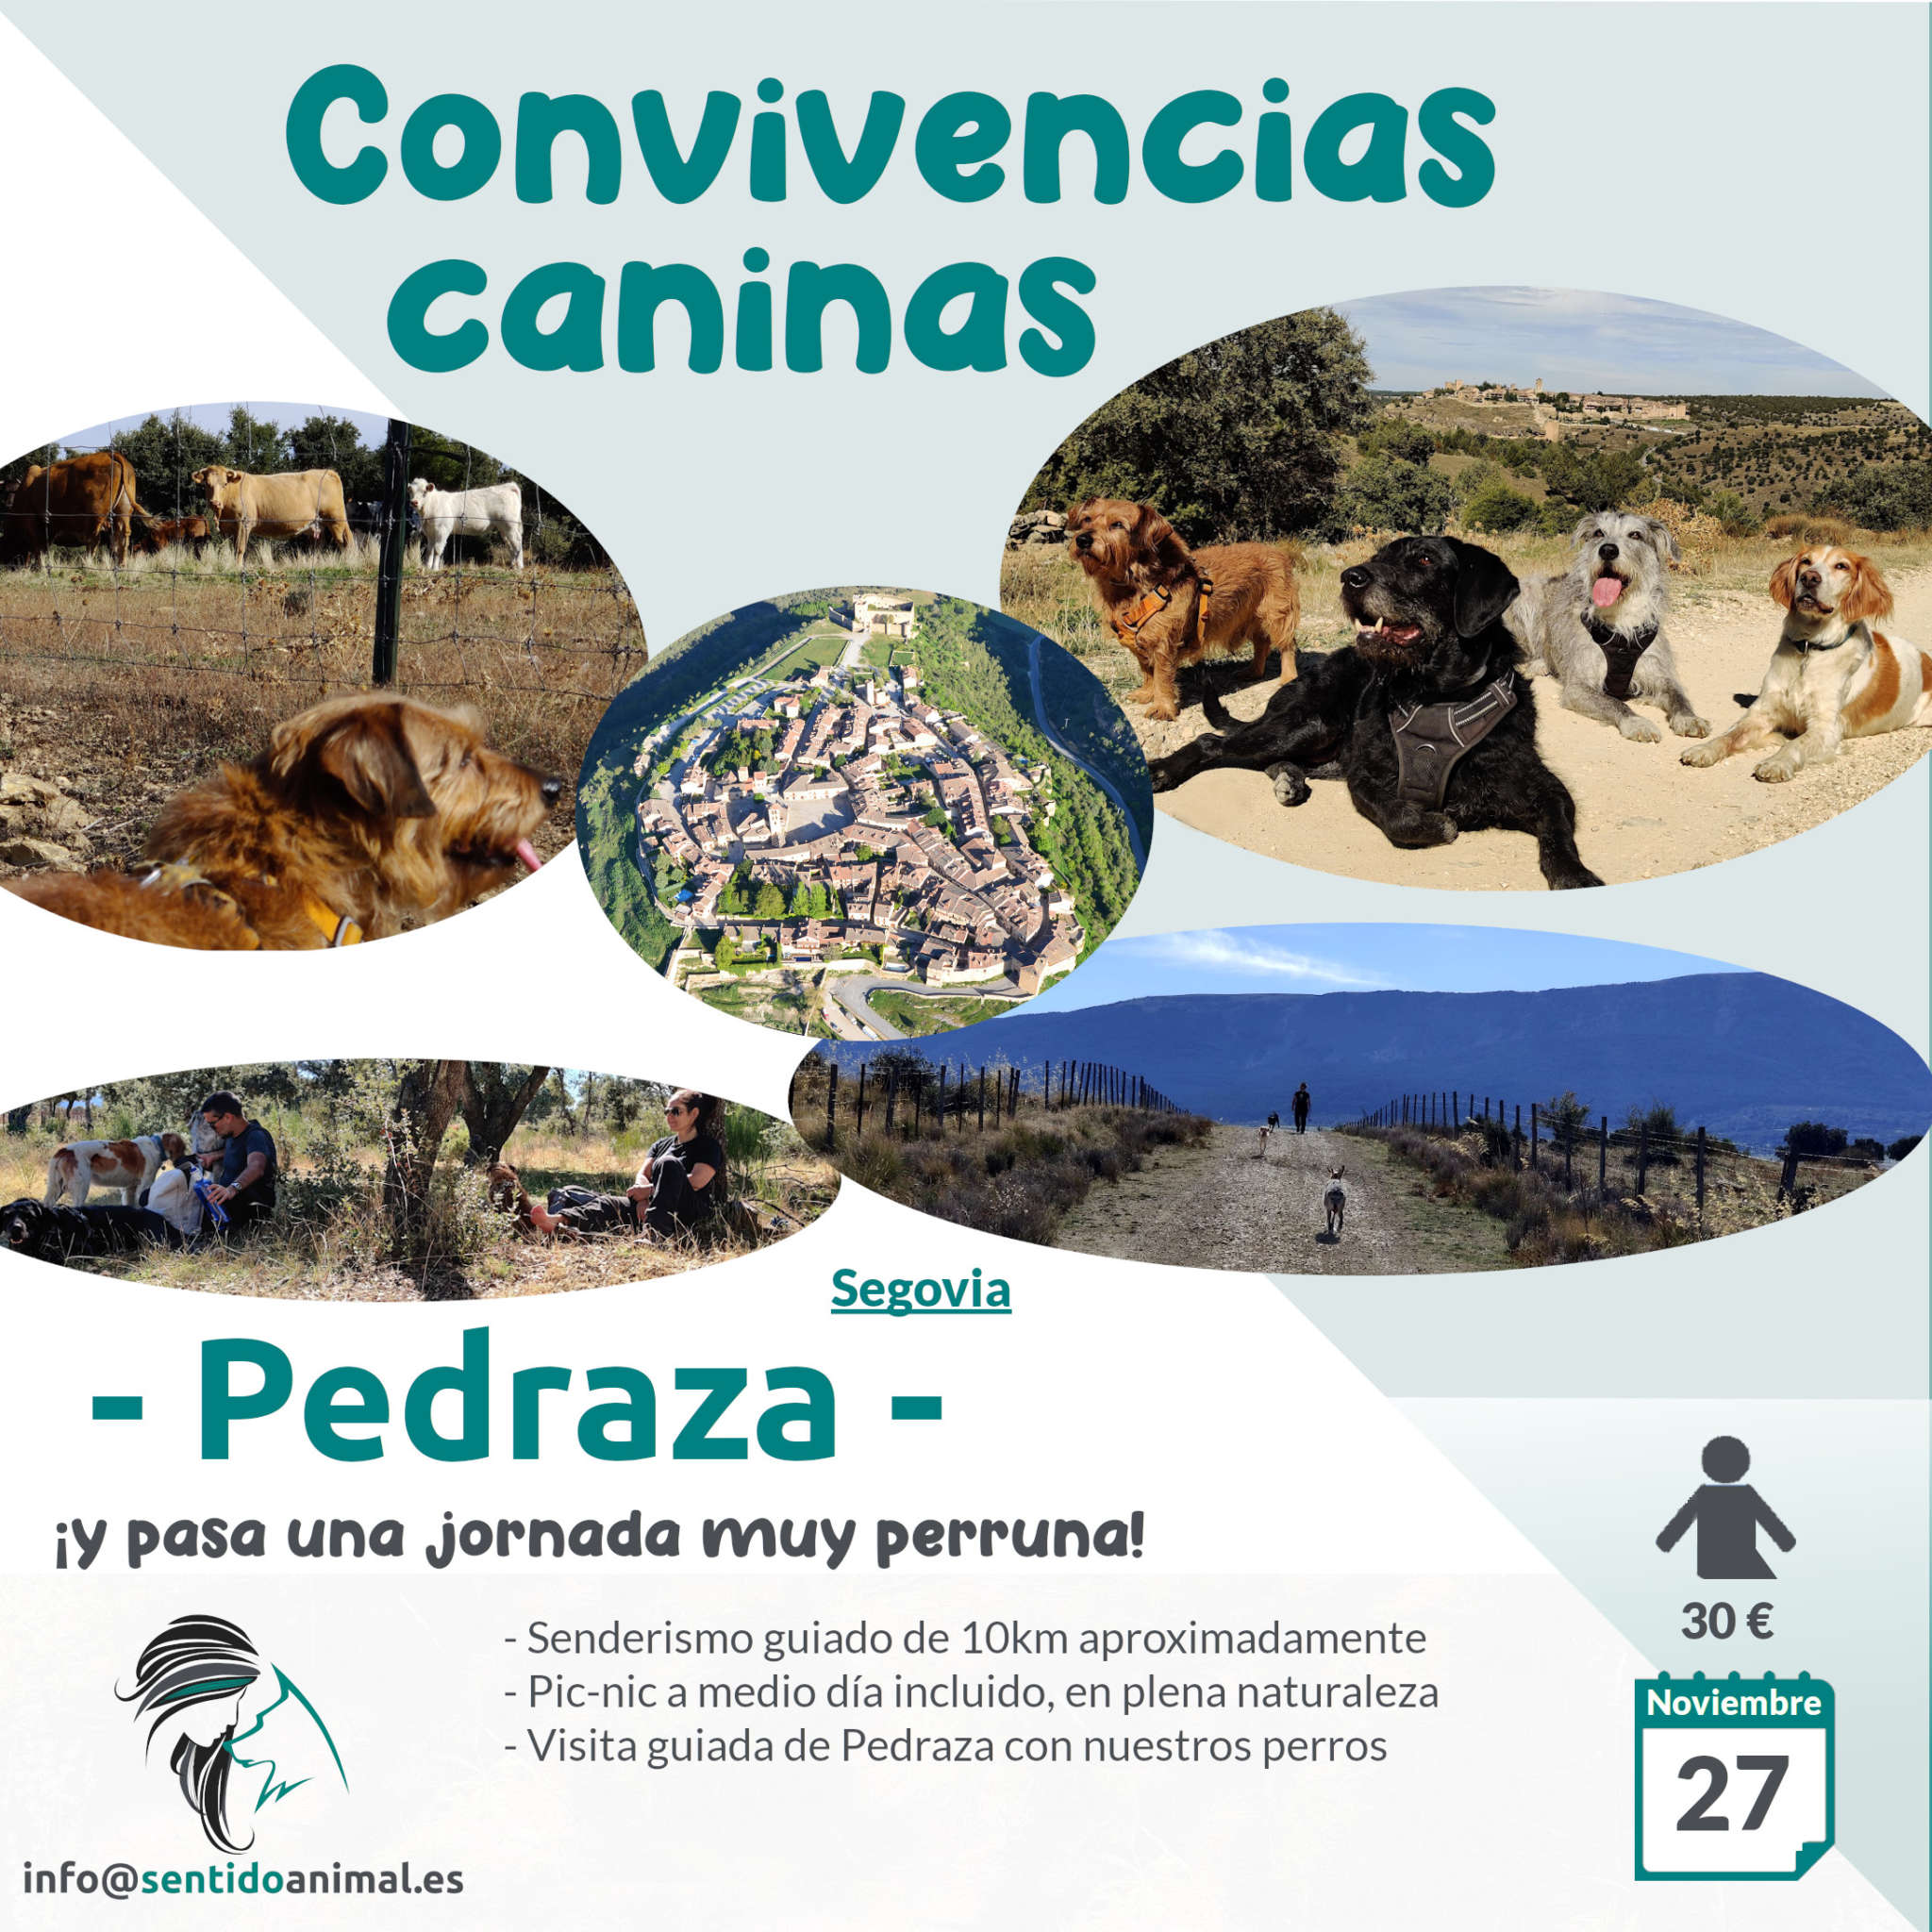 Convivencias -caninas_Pedraza_2